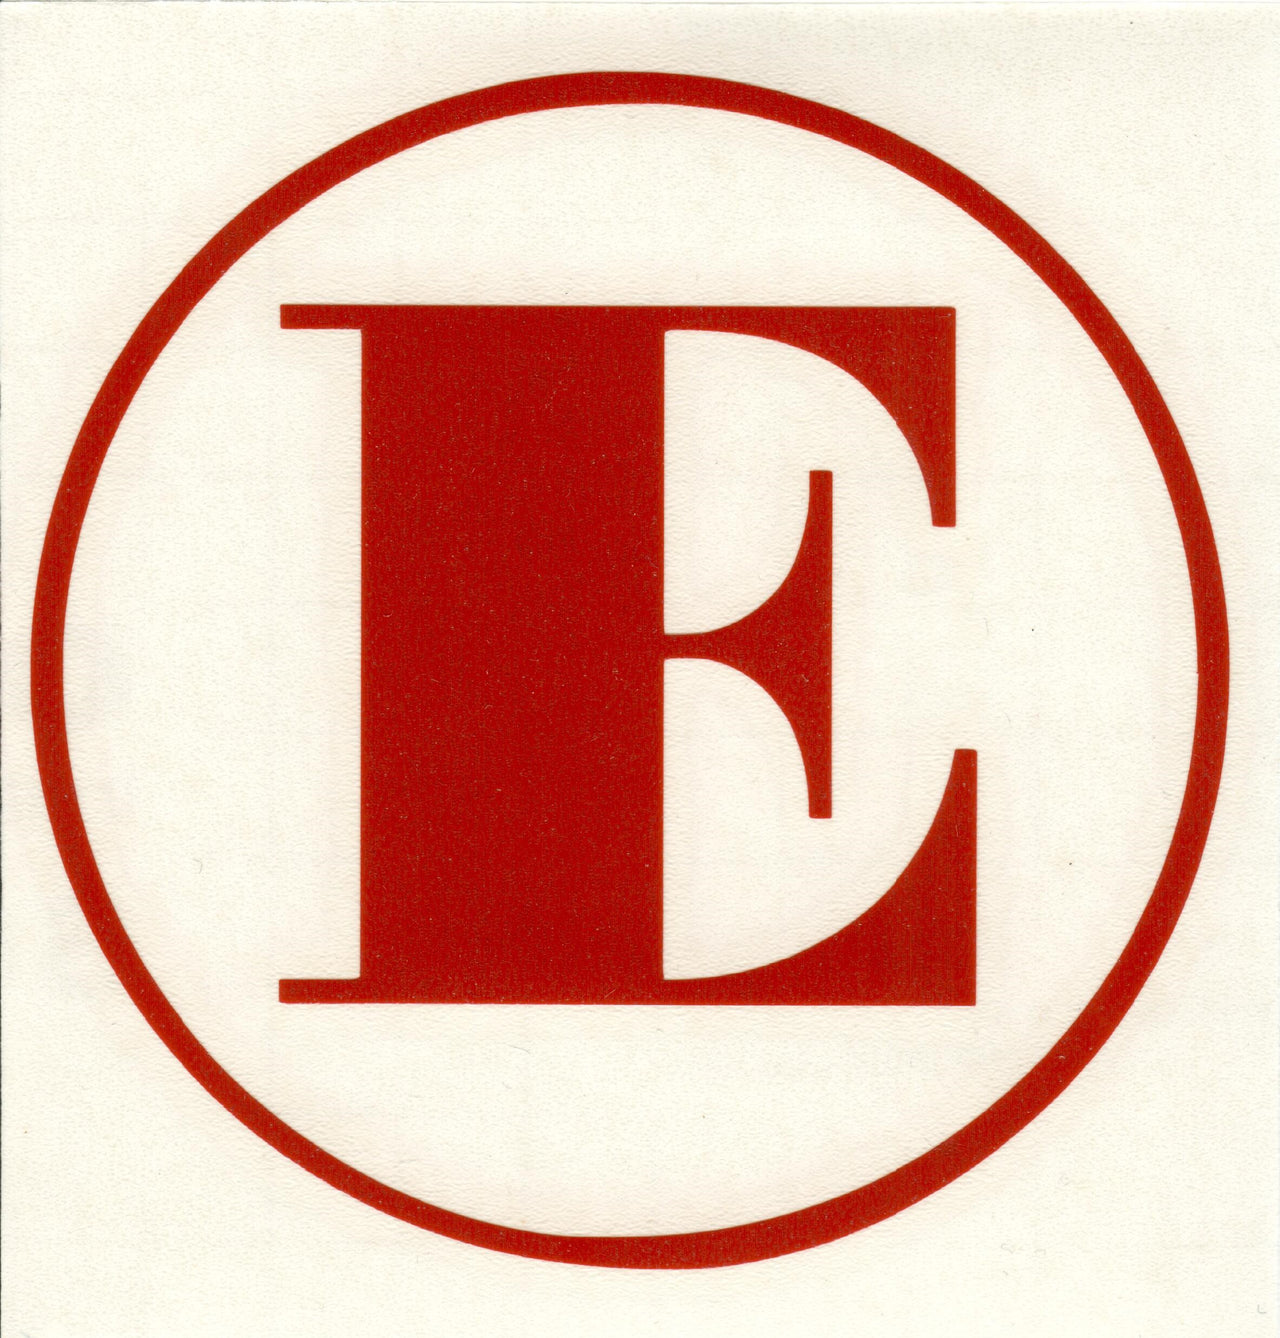 Extinguisher "E" Decal